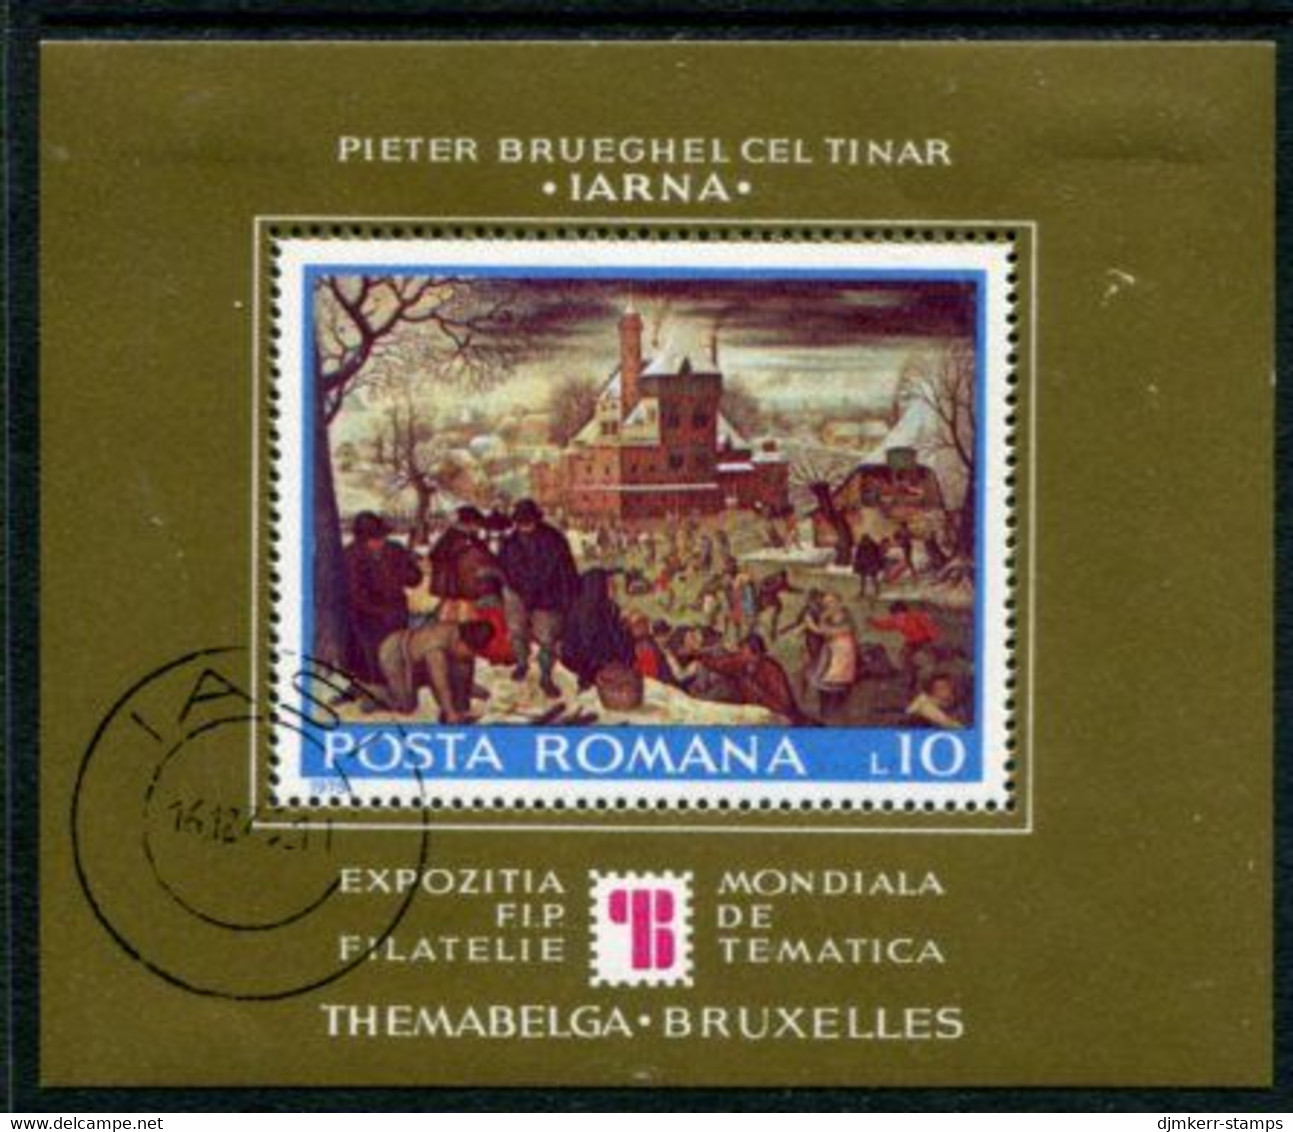 ROMANIA 1975 THEMABELGA Stamp Exhibition Block Used.  Michel Block 127 - Blocks & Kleinbögen